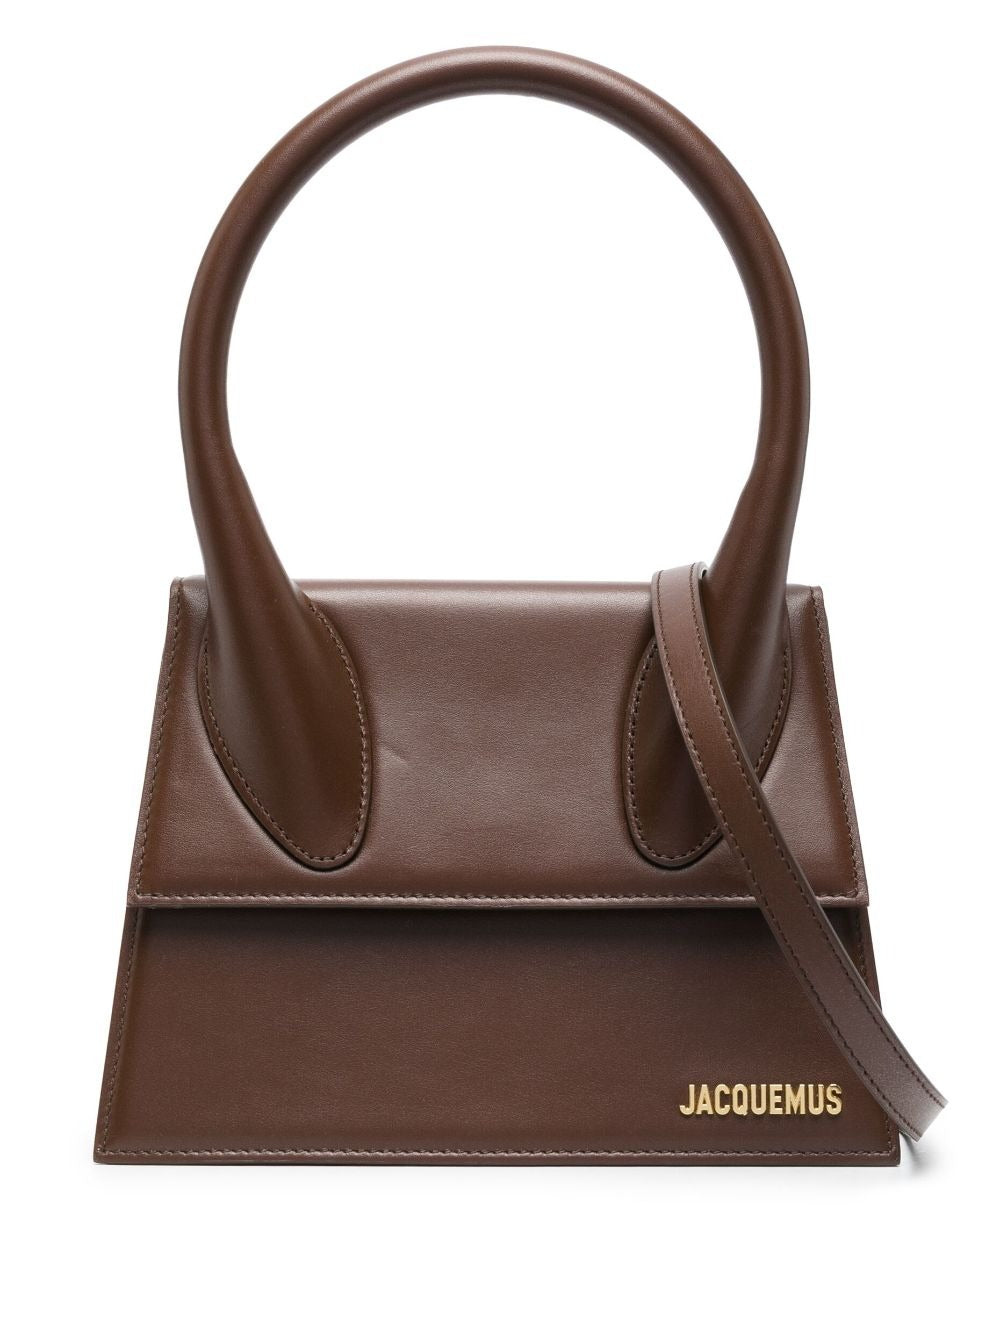 Jacquemus Le Grand Chiquito Bag